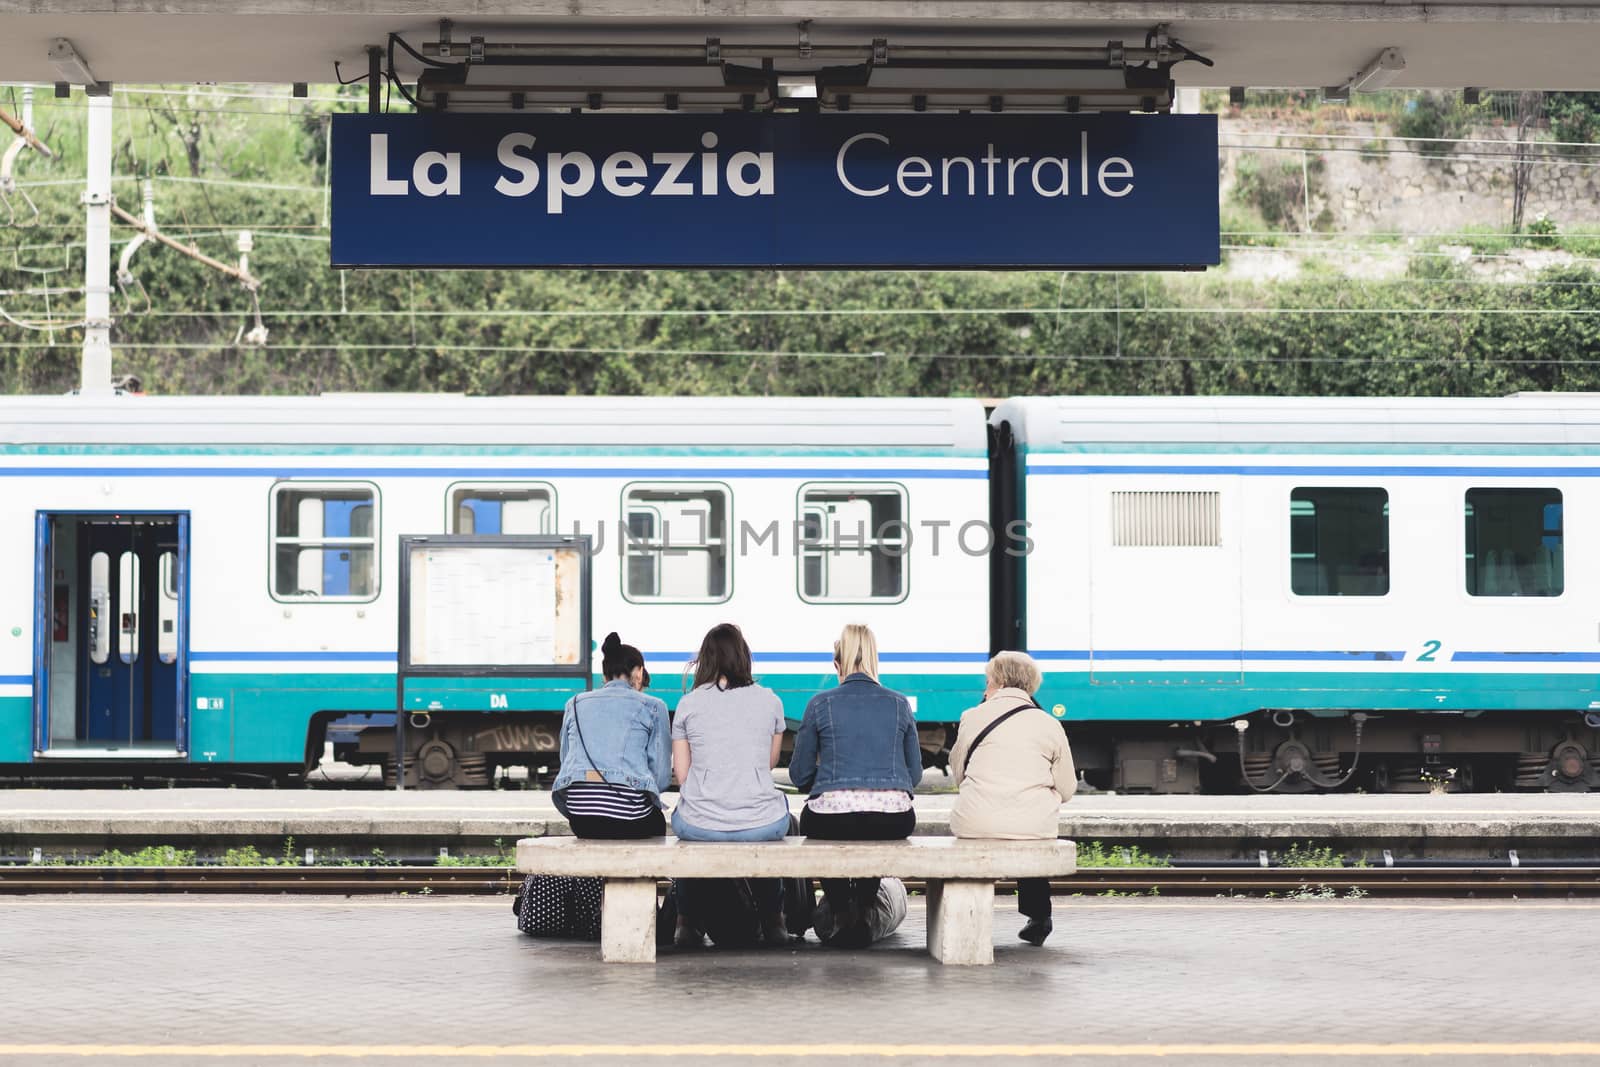 La Spezia, Italy - Apr 8, 2016: Unidentified four European female travelers, young and senior, wait for train at La Spezia Central public train station, visiting Cinque Terre, Italy